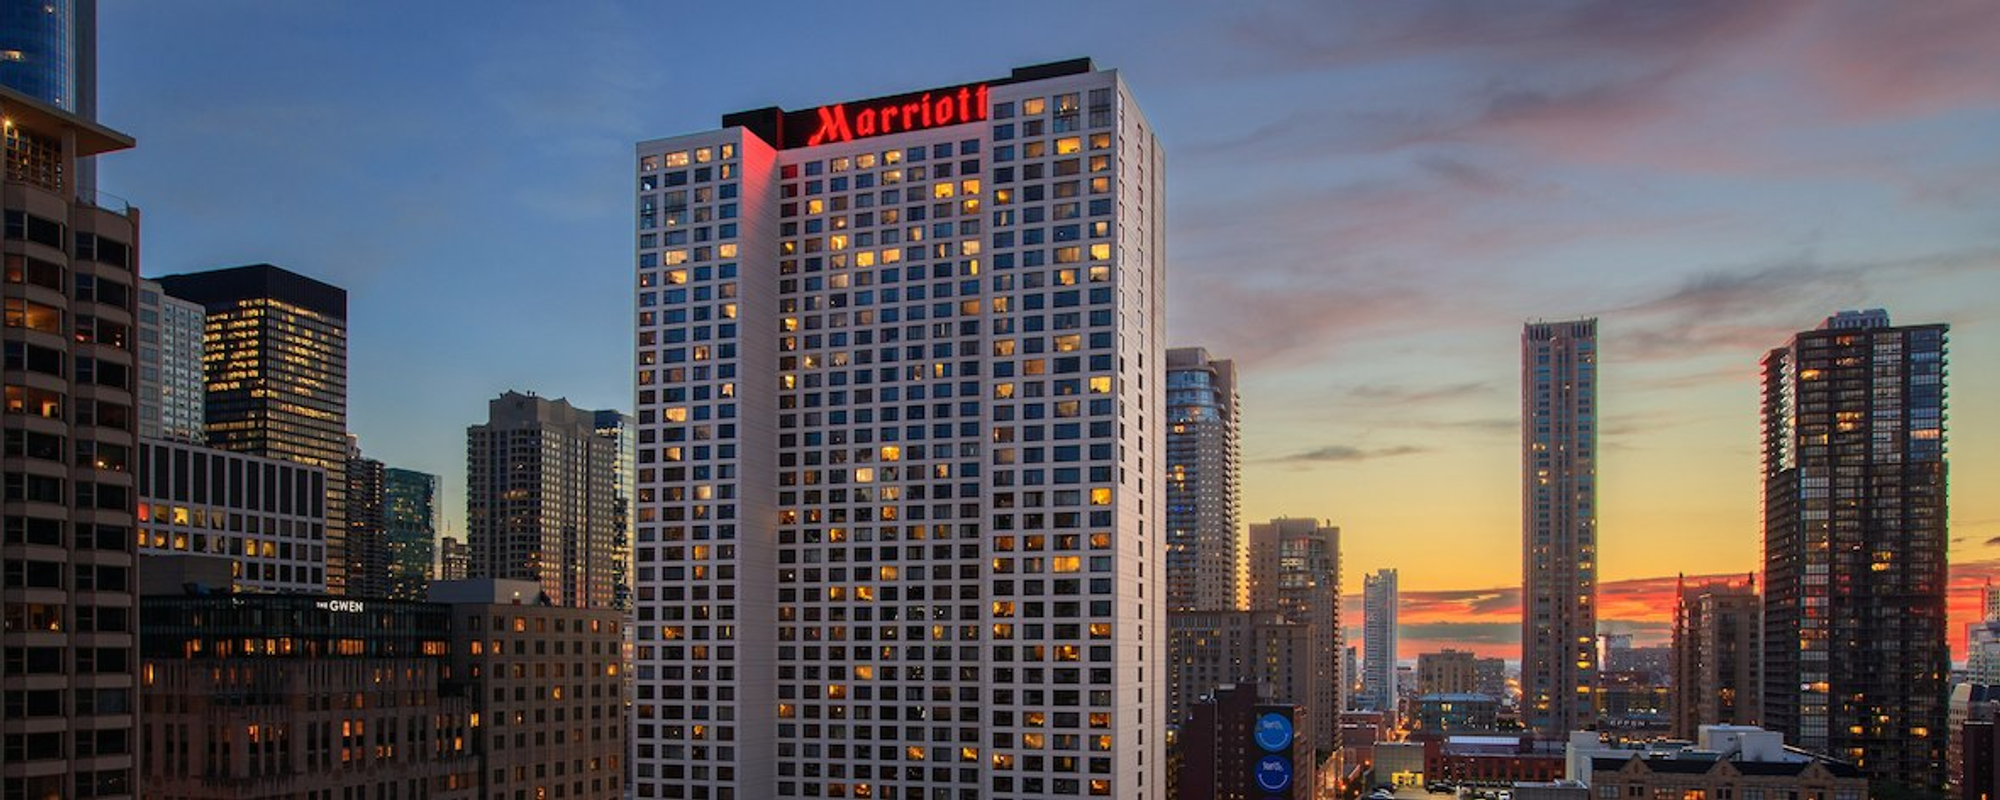 Marriott Hotel - Downtown Chicago